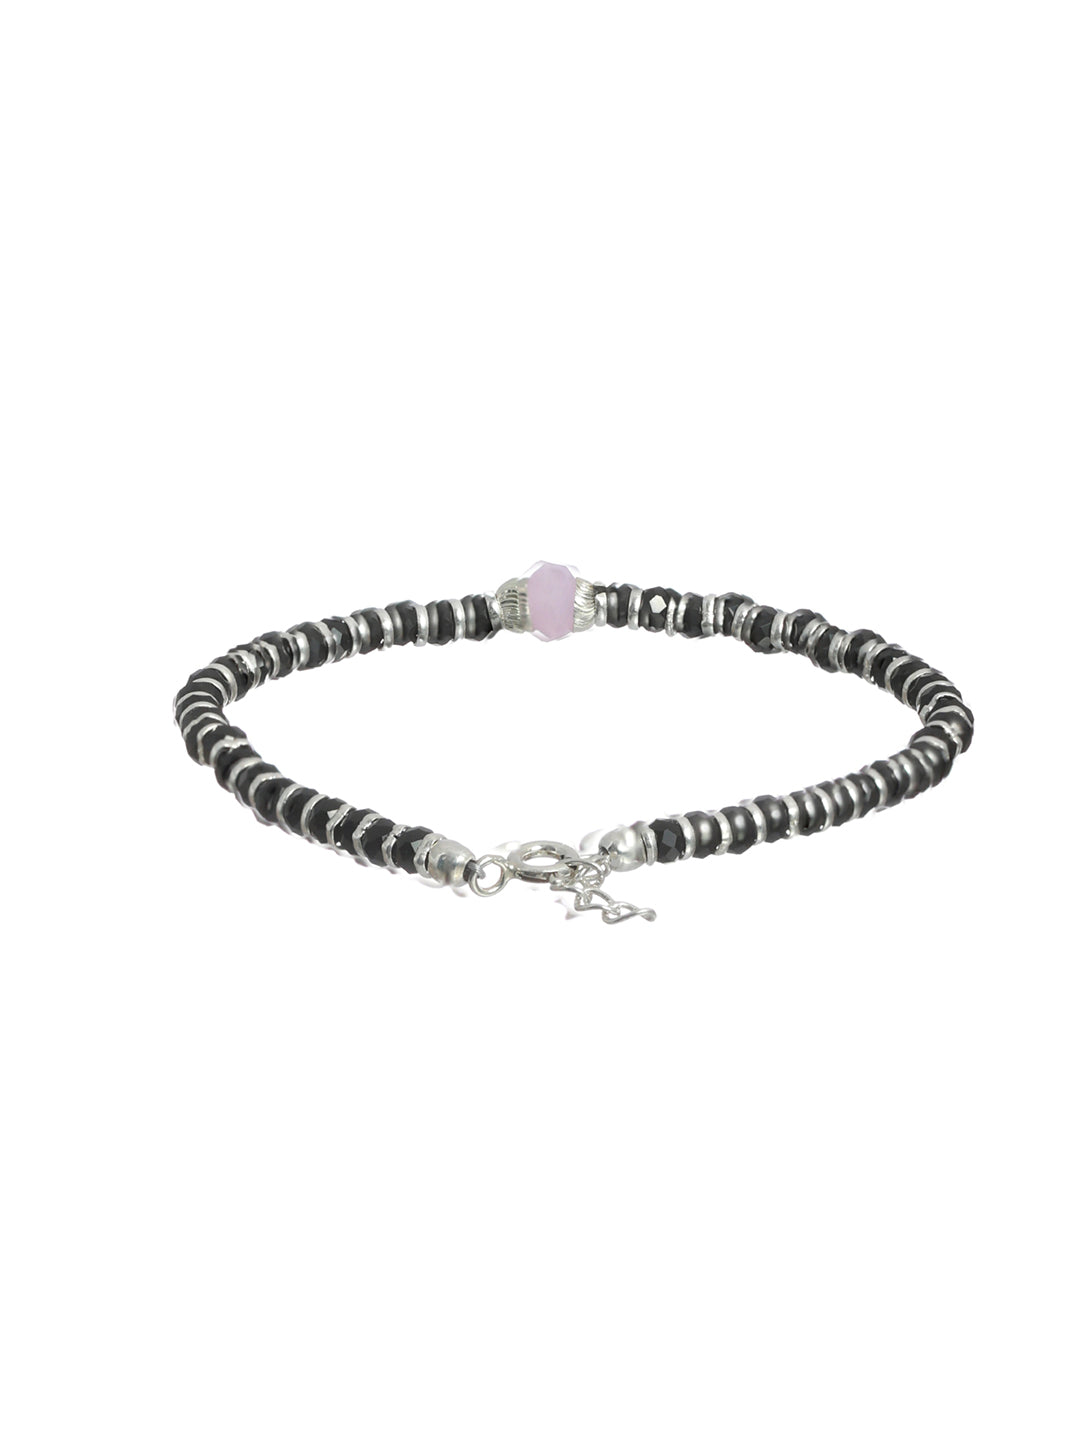 Pink and Black Stone Sterling Silver Bracelet